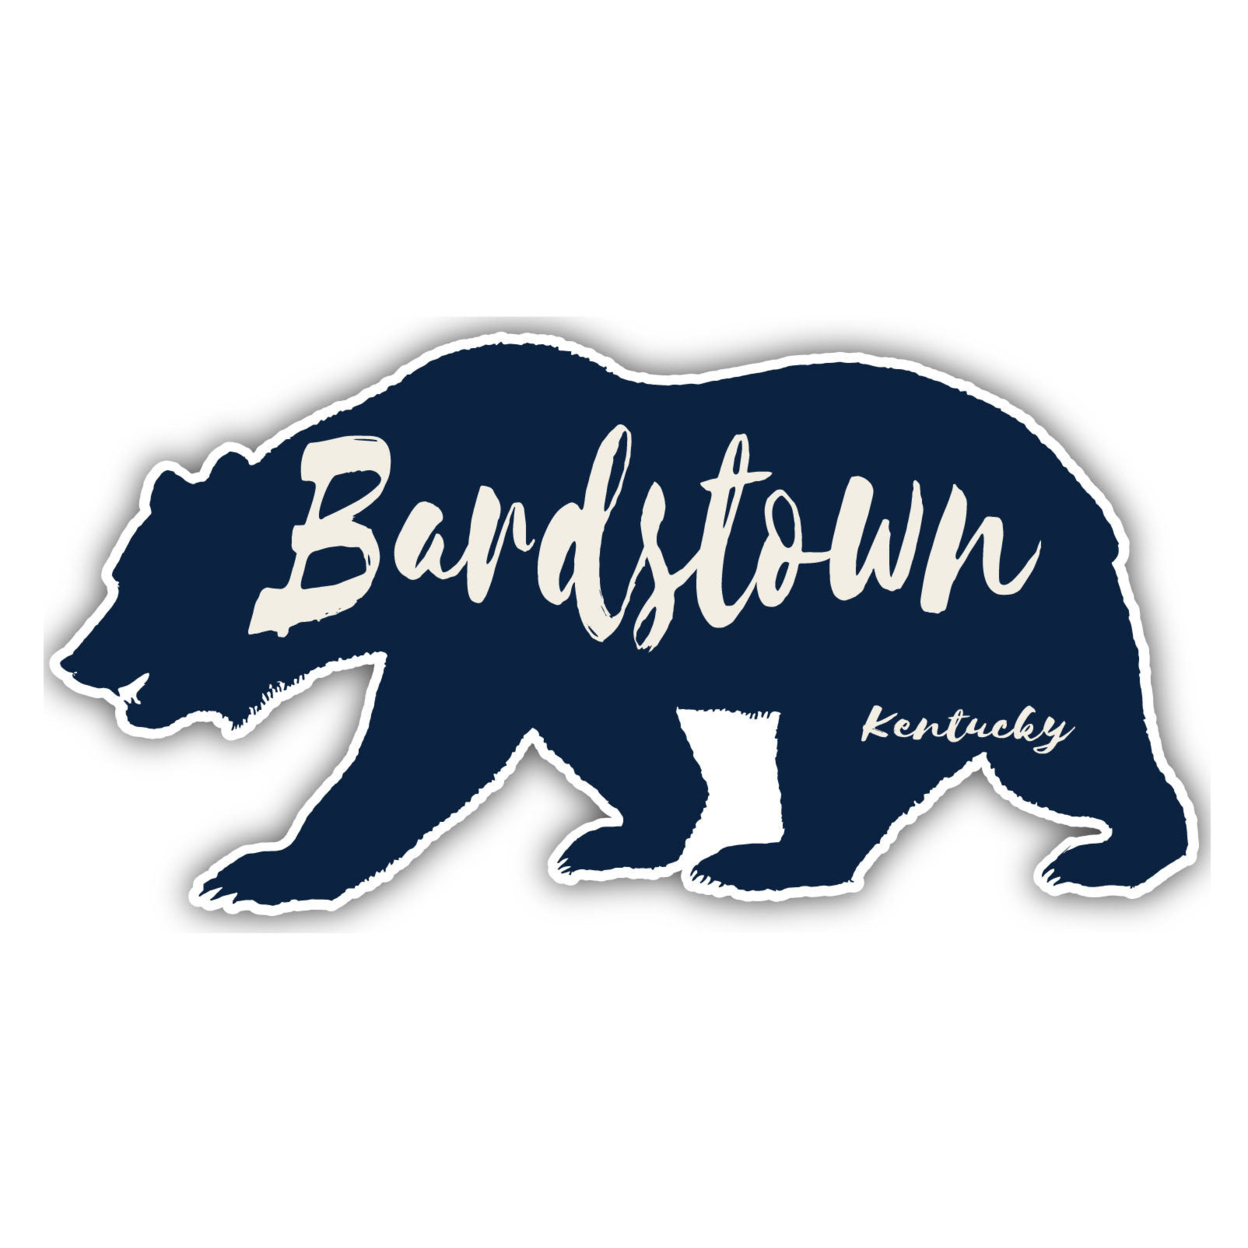 Bardstown Kentucky Souvenir Decorative Stickers (Choose Theme And Size) - Single Unit, 4-Inch, Bear